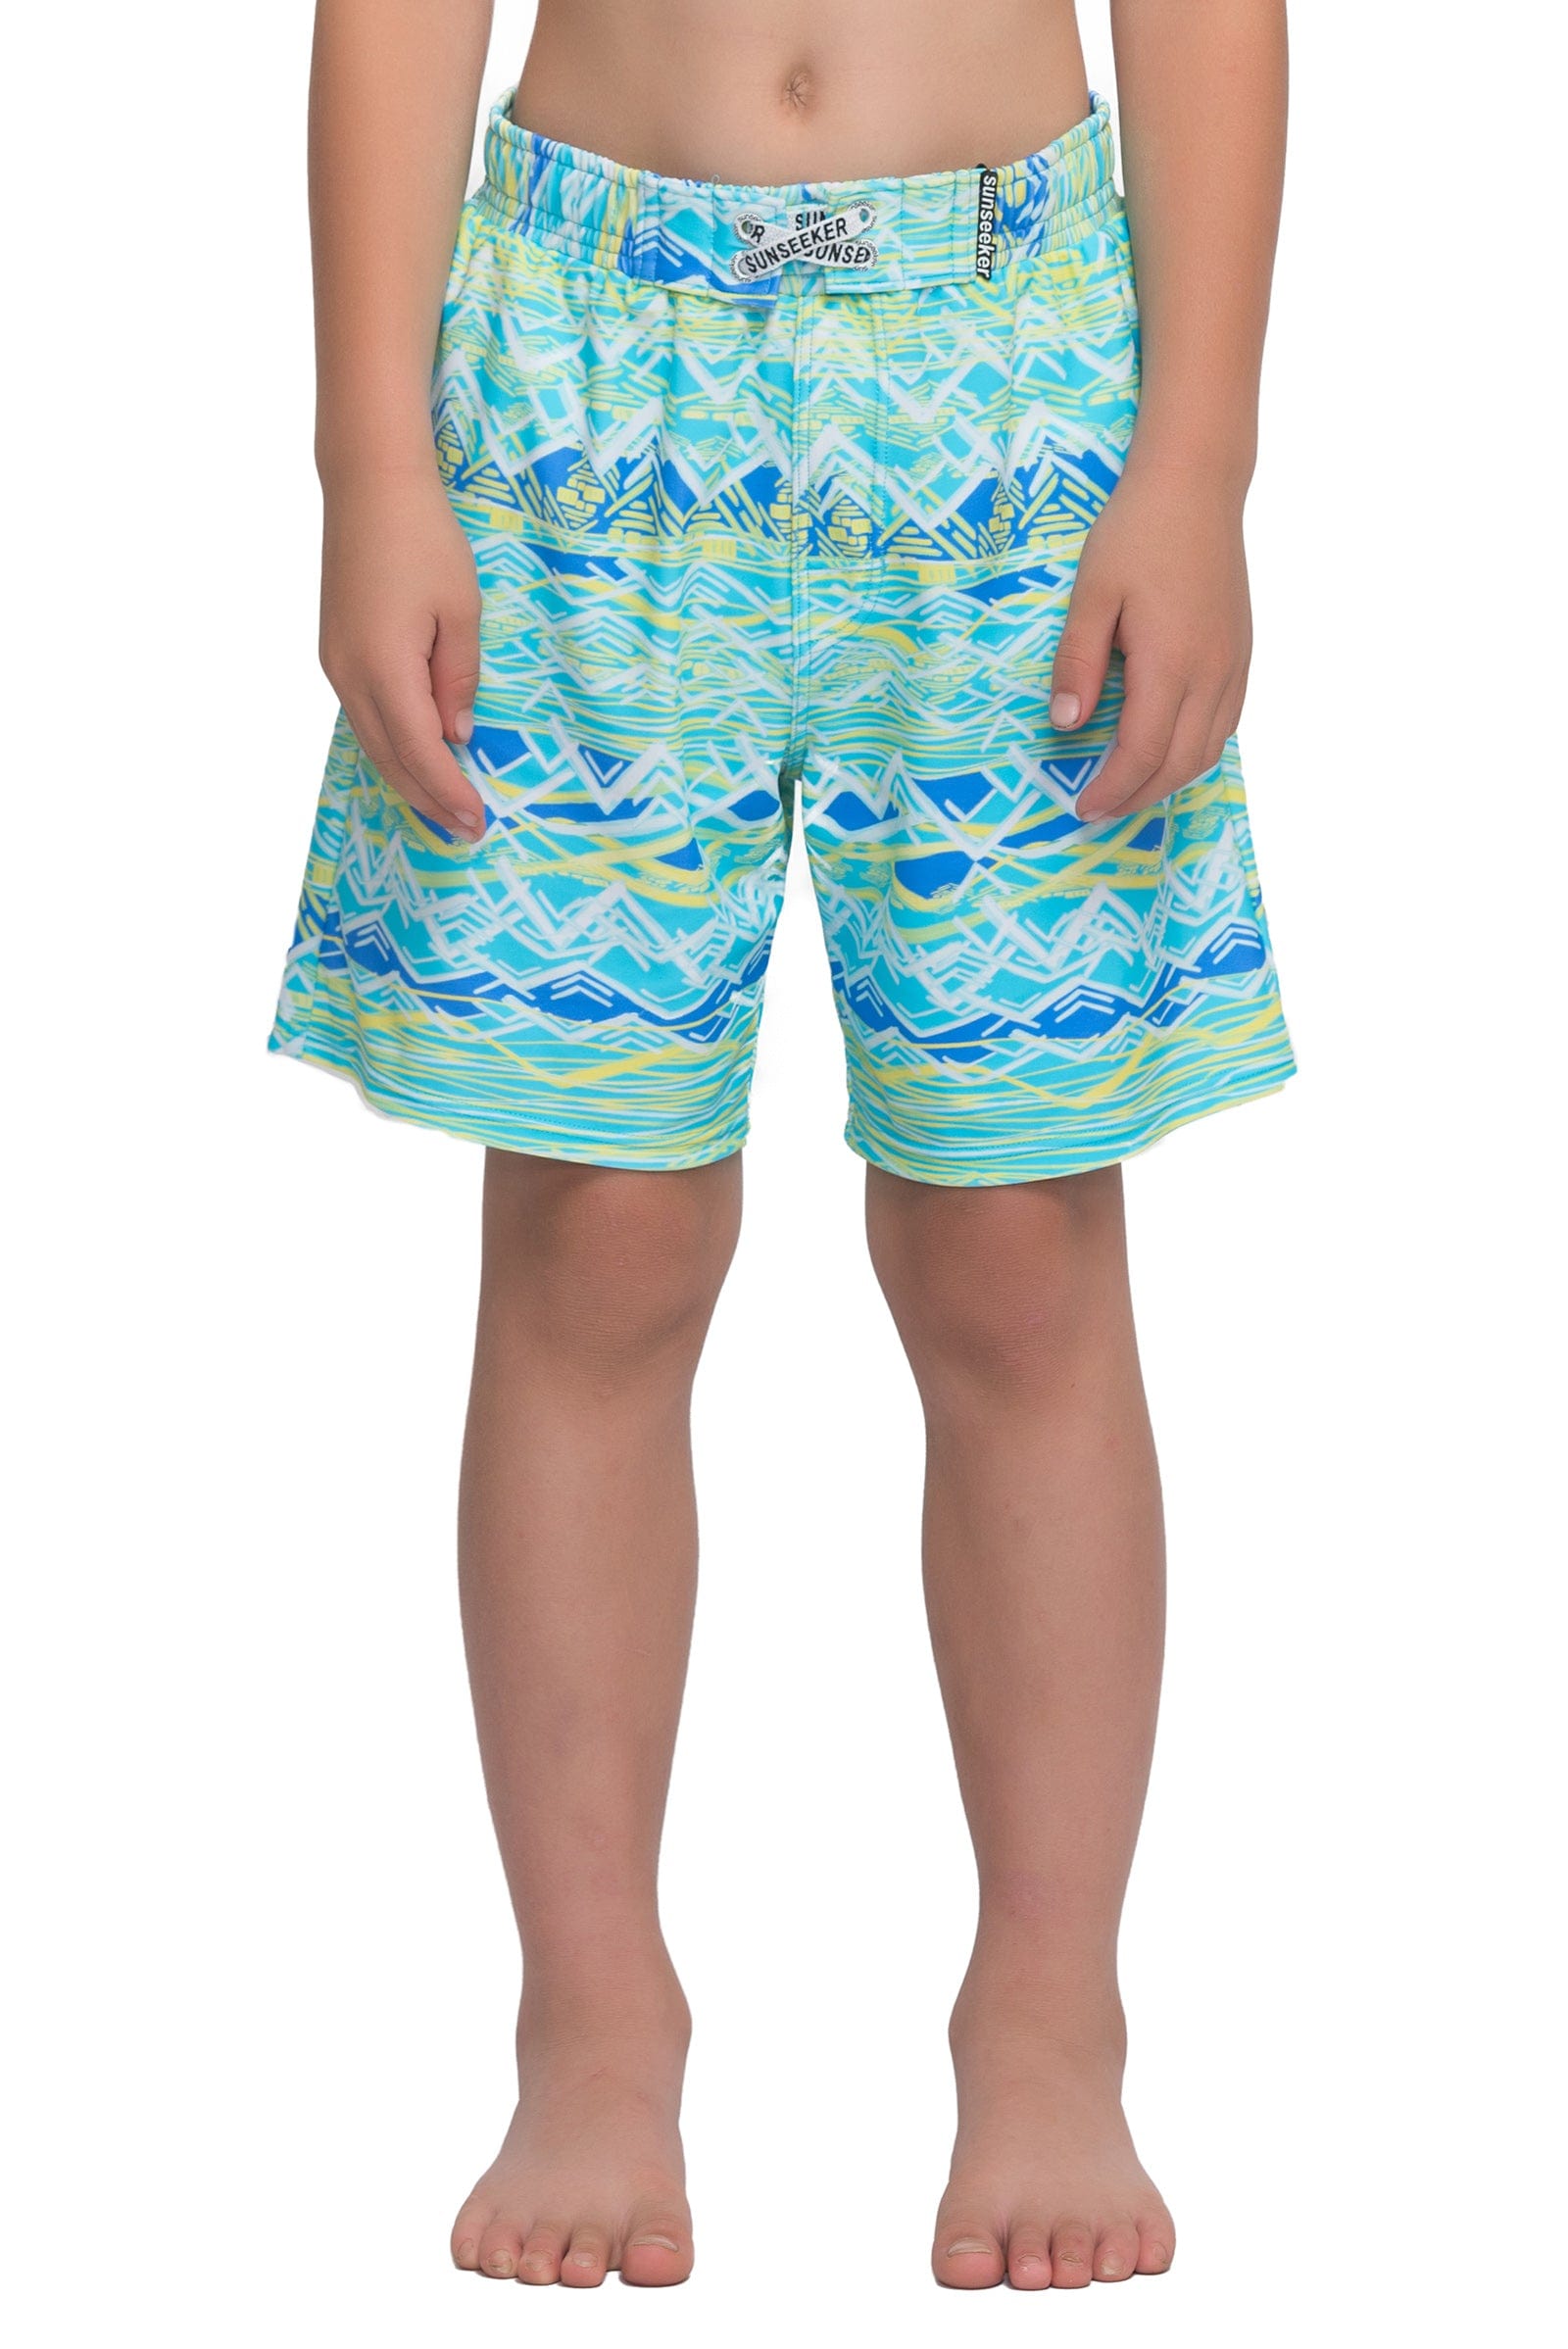 Sea short sleeve swim shirt with hat - Sunseeker